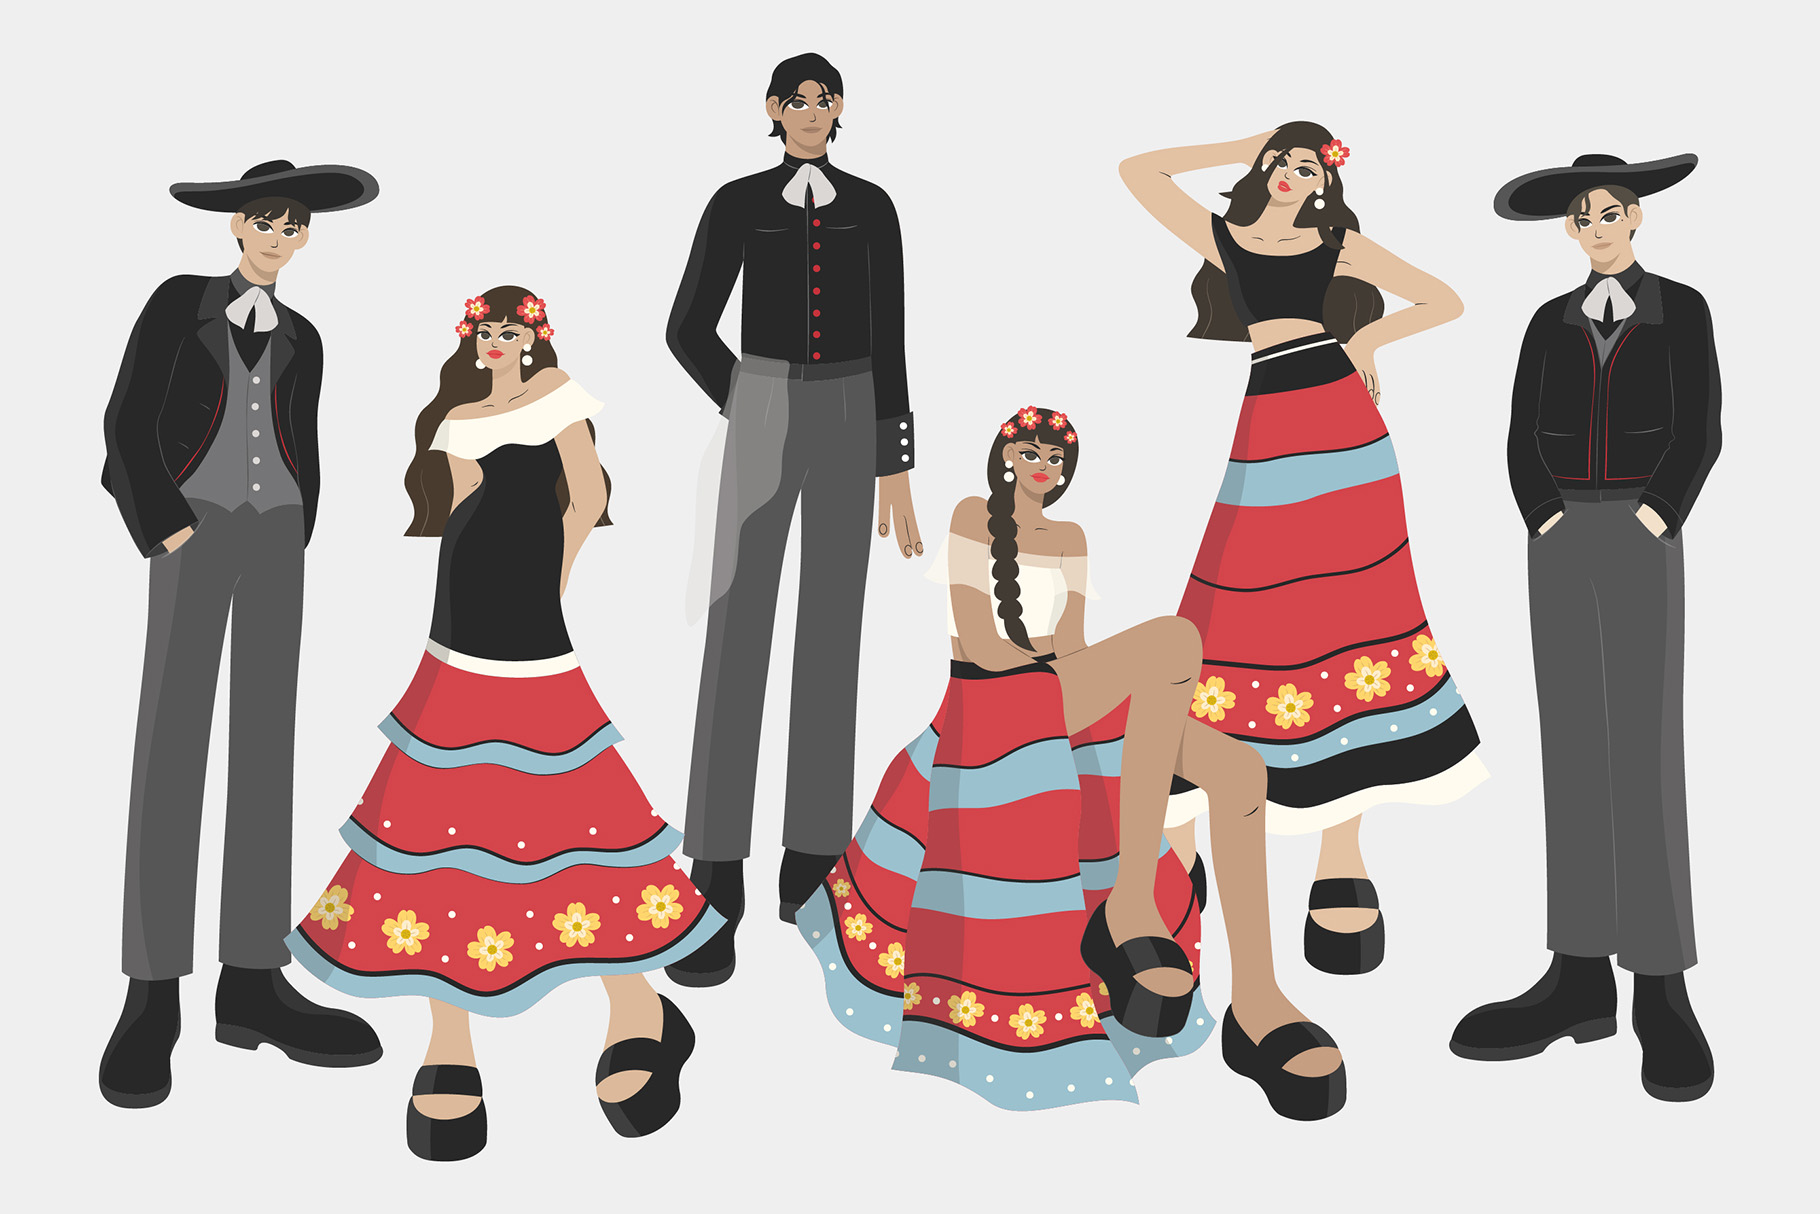 Latin People Illustrations Set(AI, EPS, PNG Format)